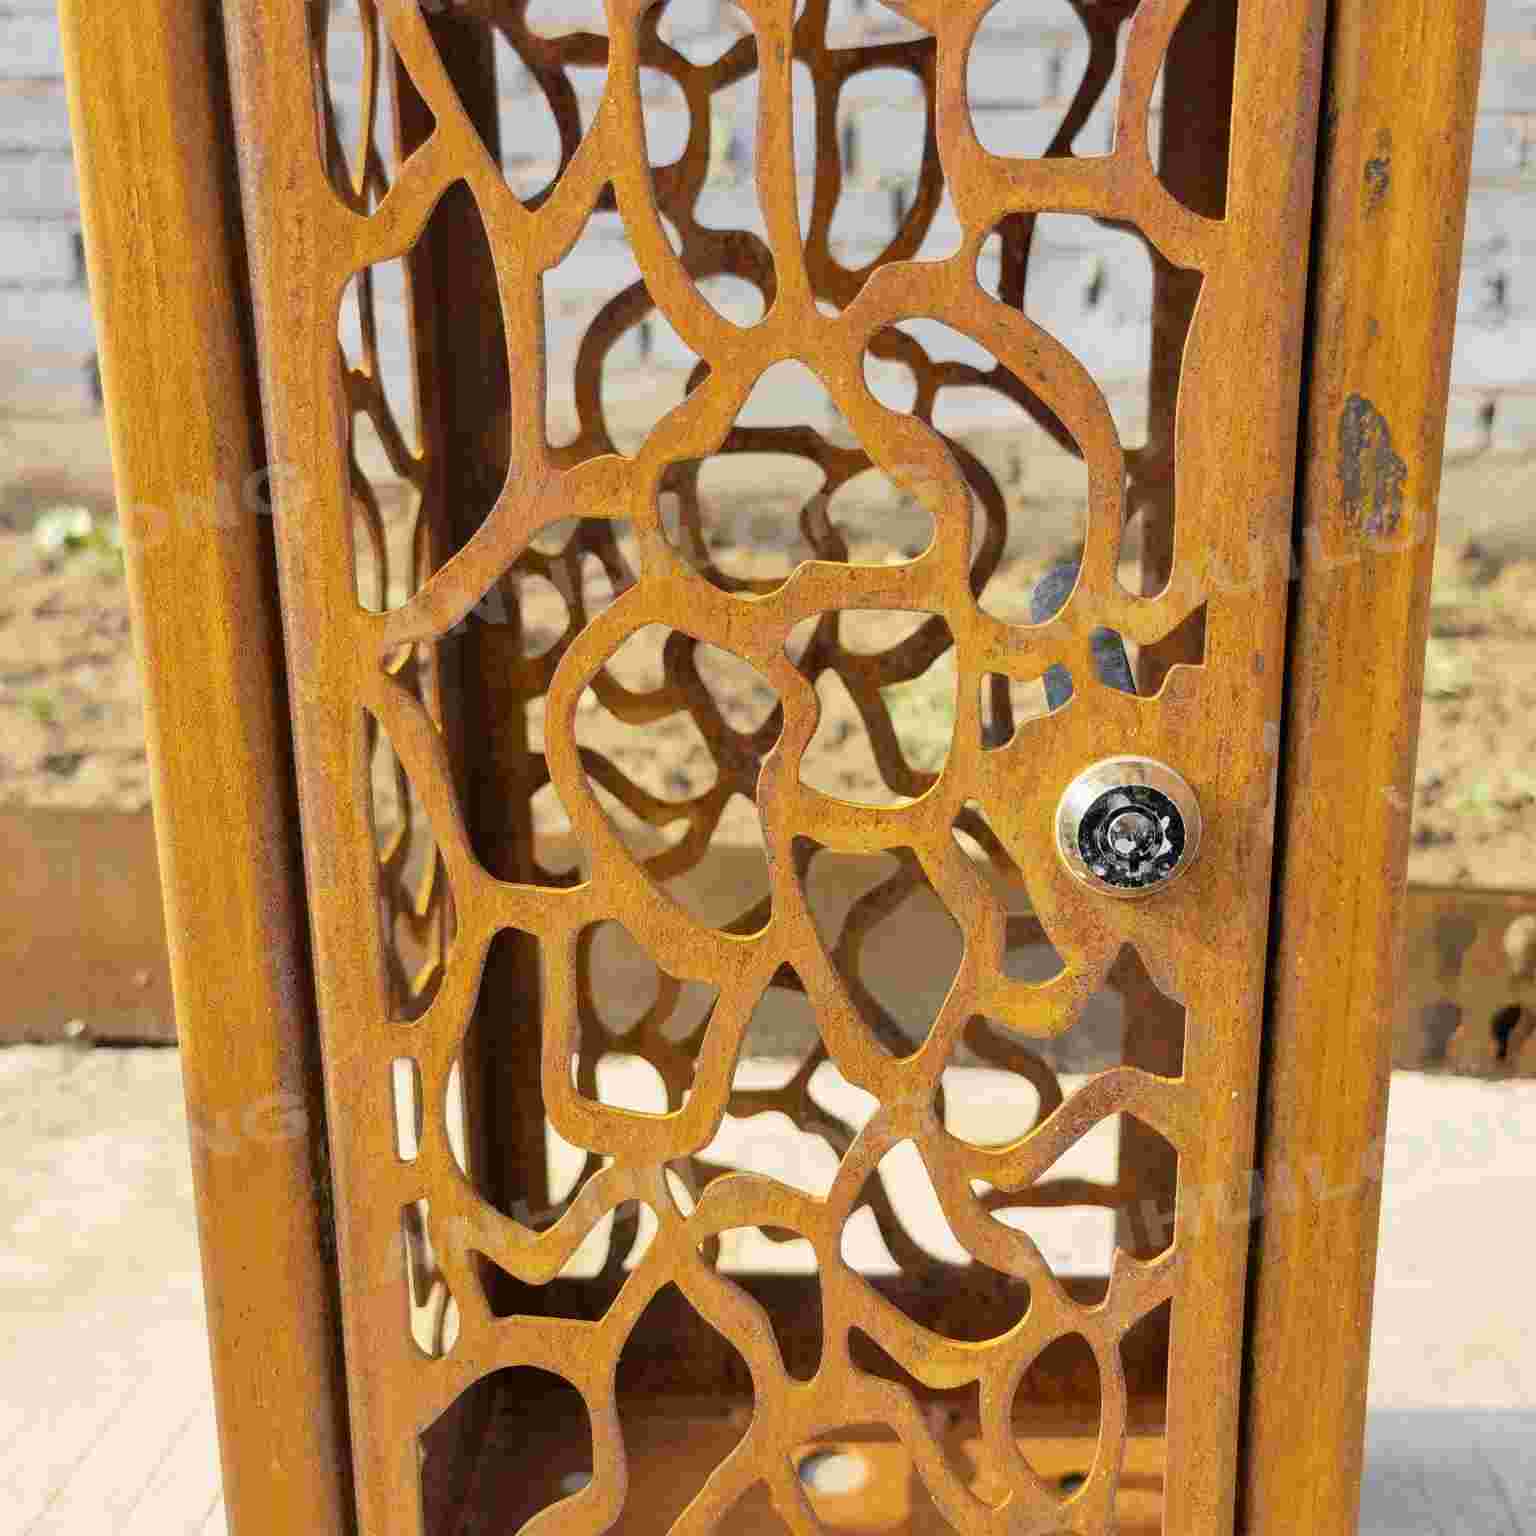 Rustic-style corten lightbox for decorative outdoor lighting